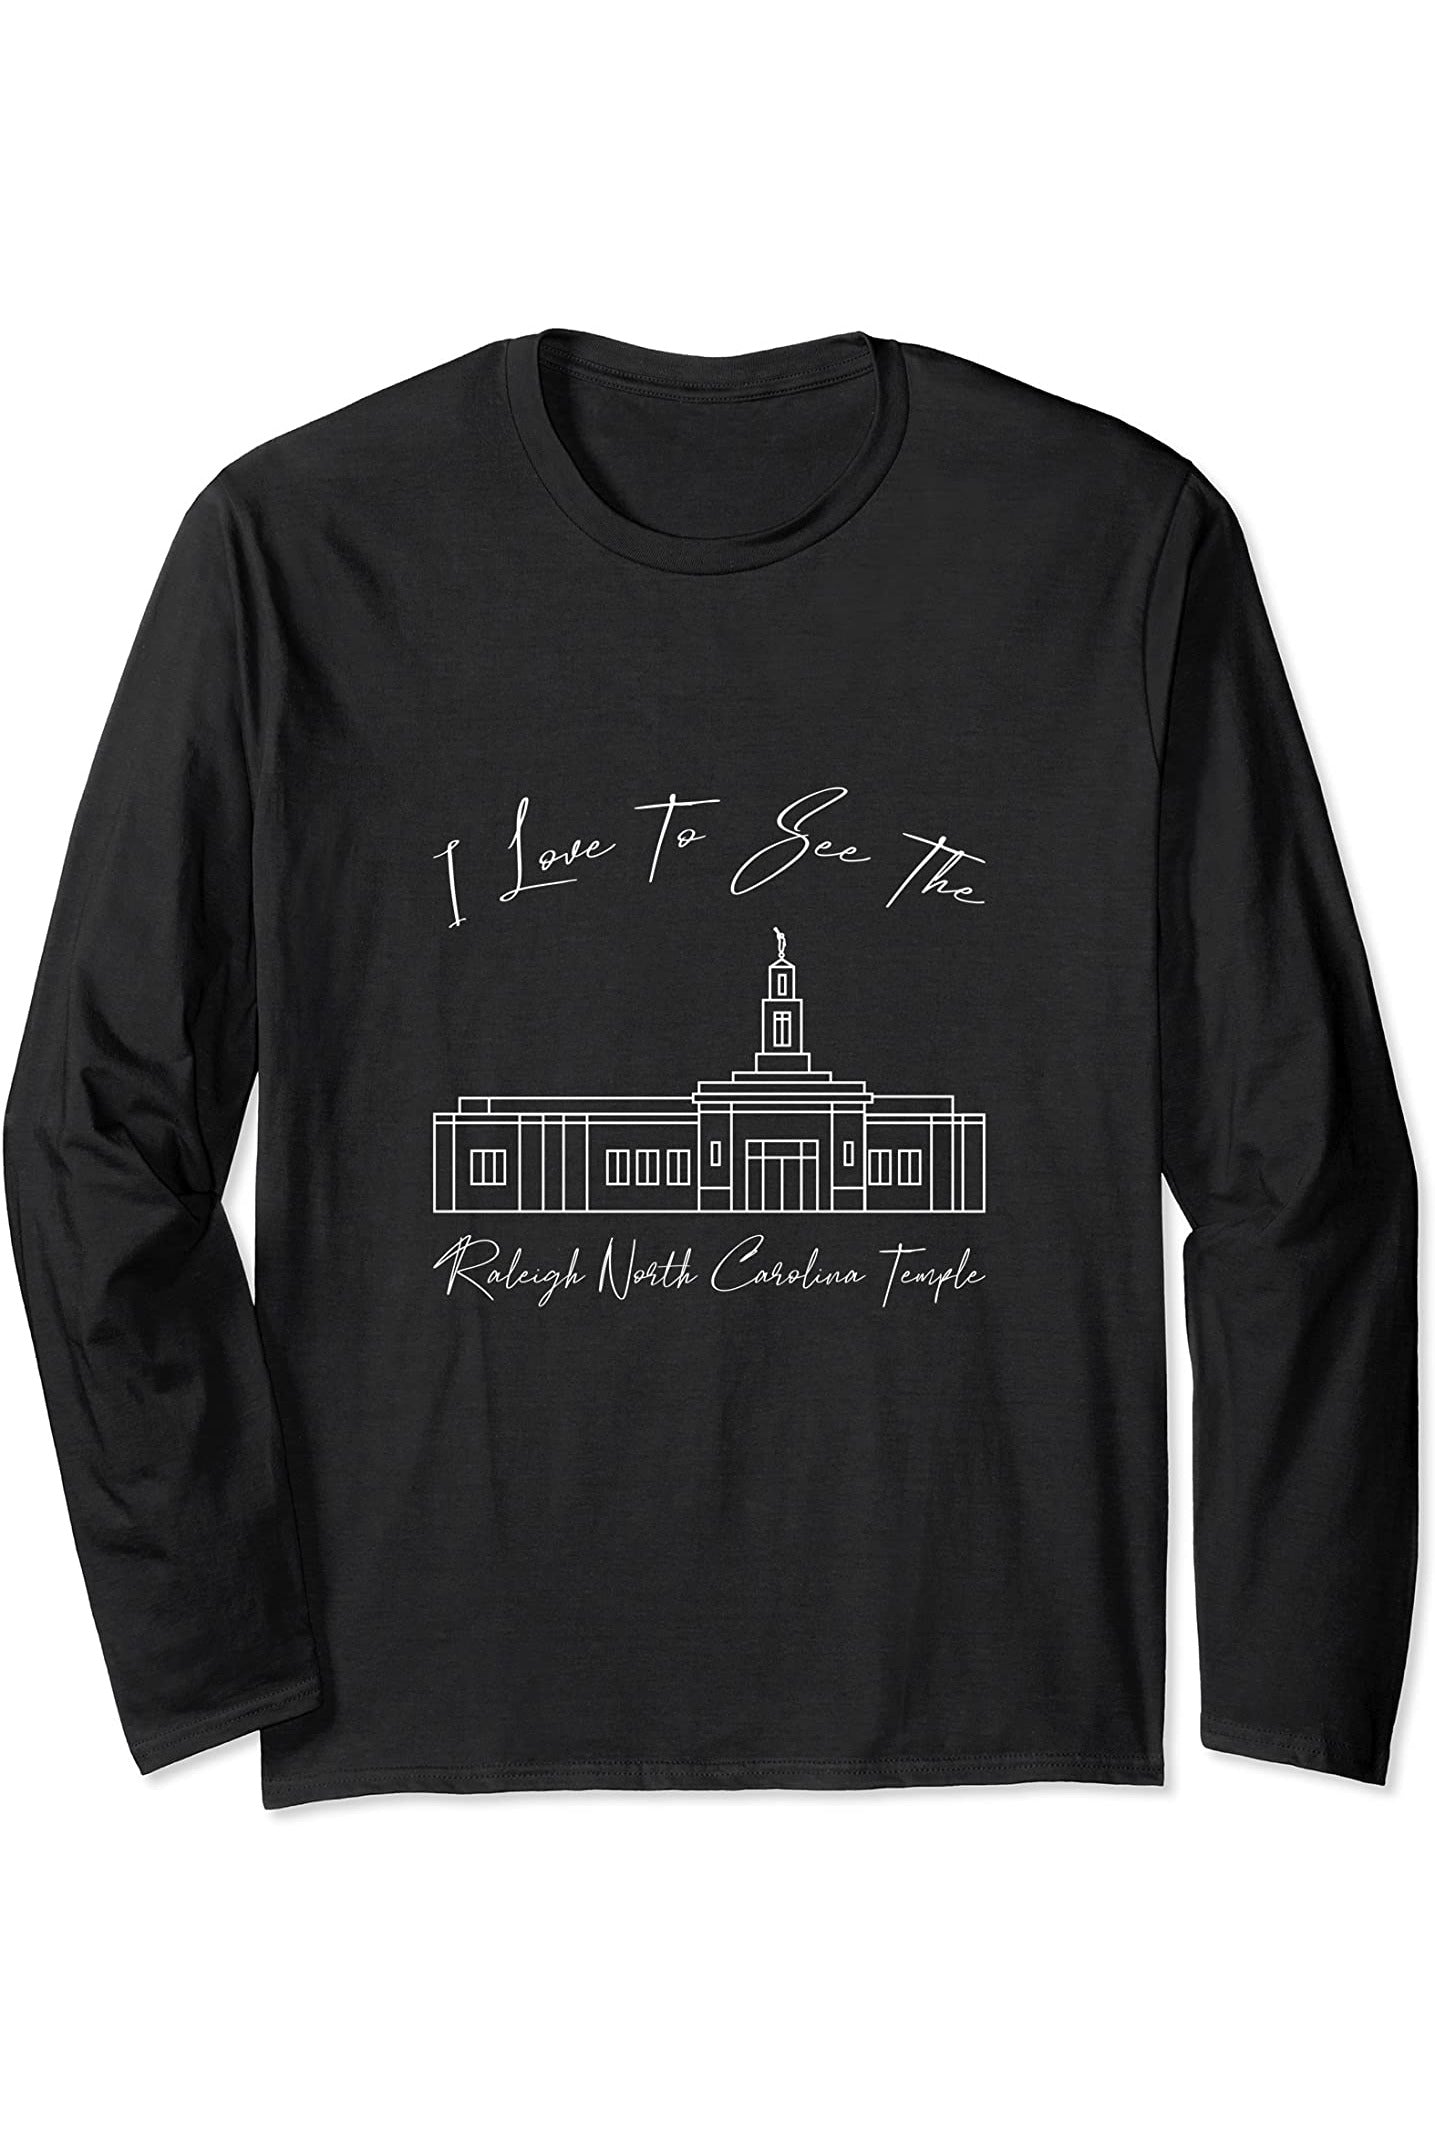 Raleigh North Carolina Temple Long Sleeve T-Shirt - Calligraphy Style (English) US